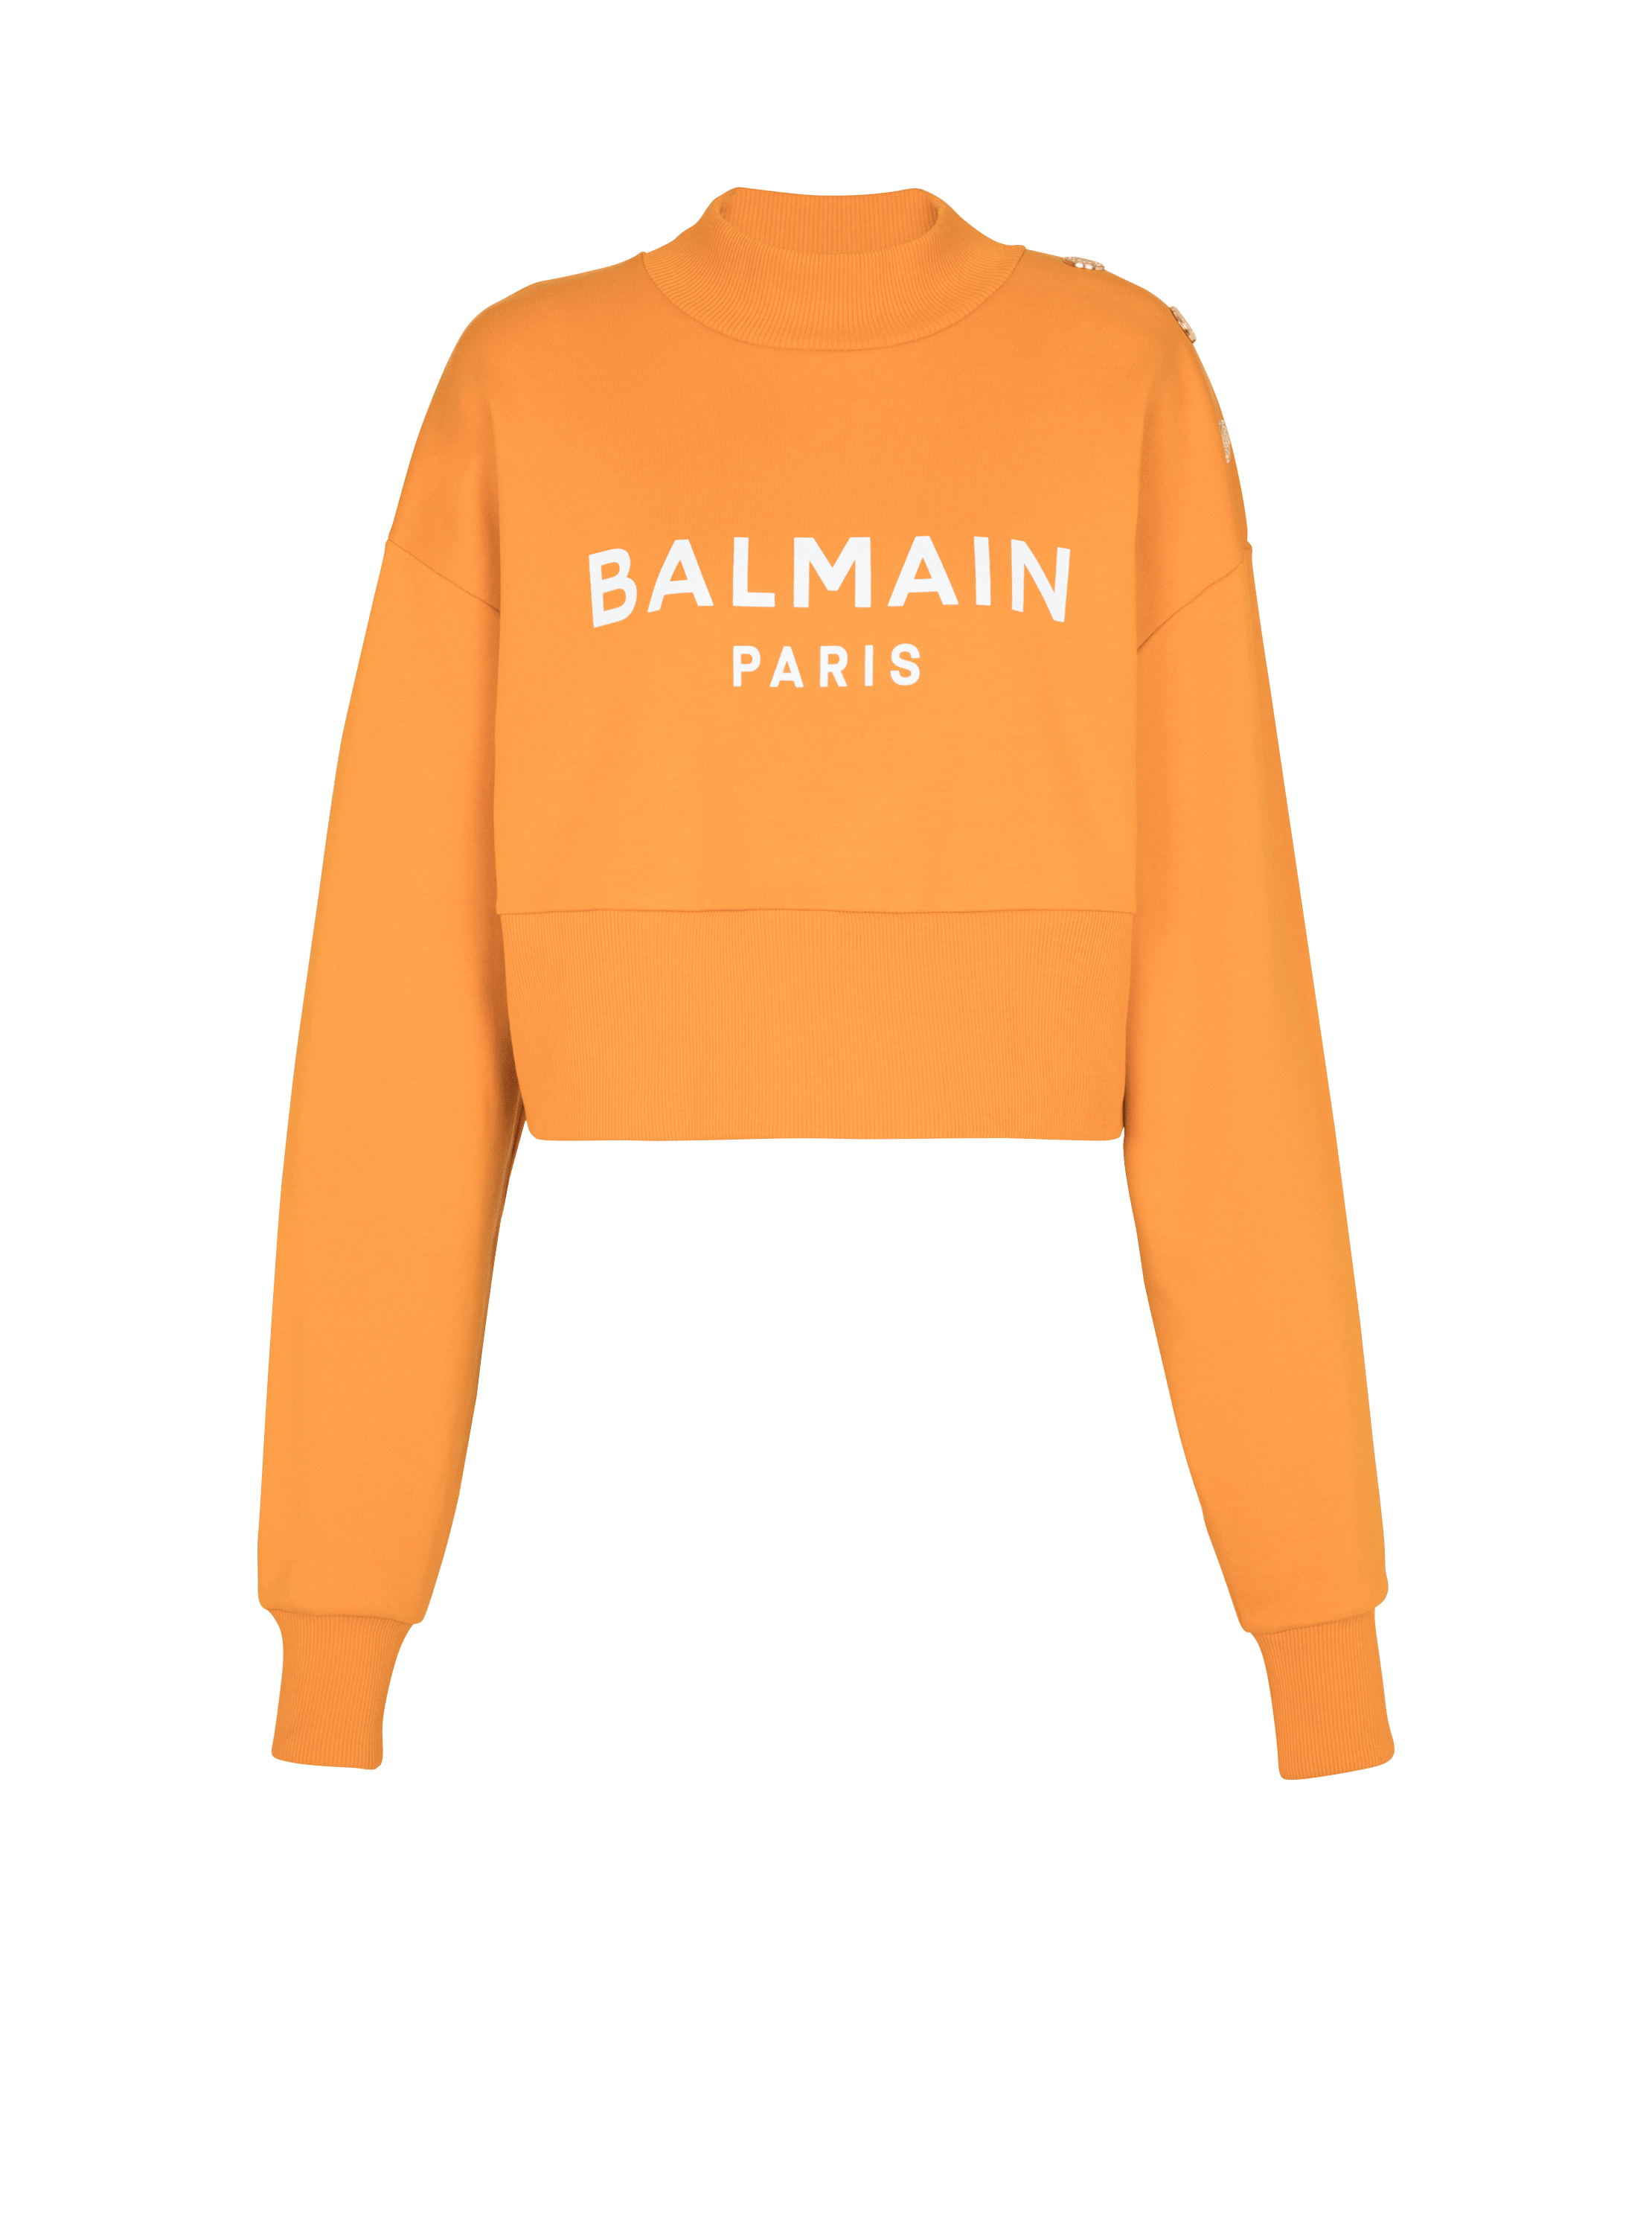 Balmain巴尔曼标志印花短款环保设计棉质运动衫, orange, hi-res